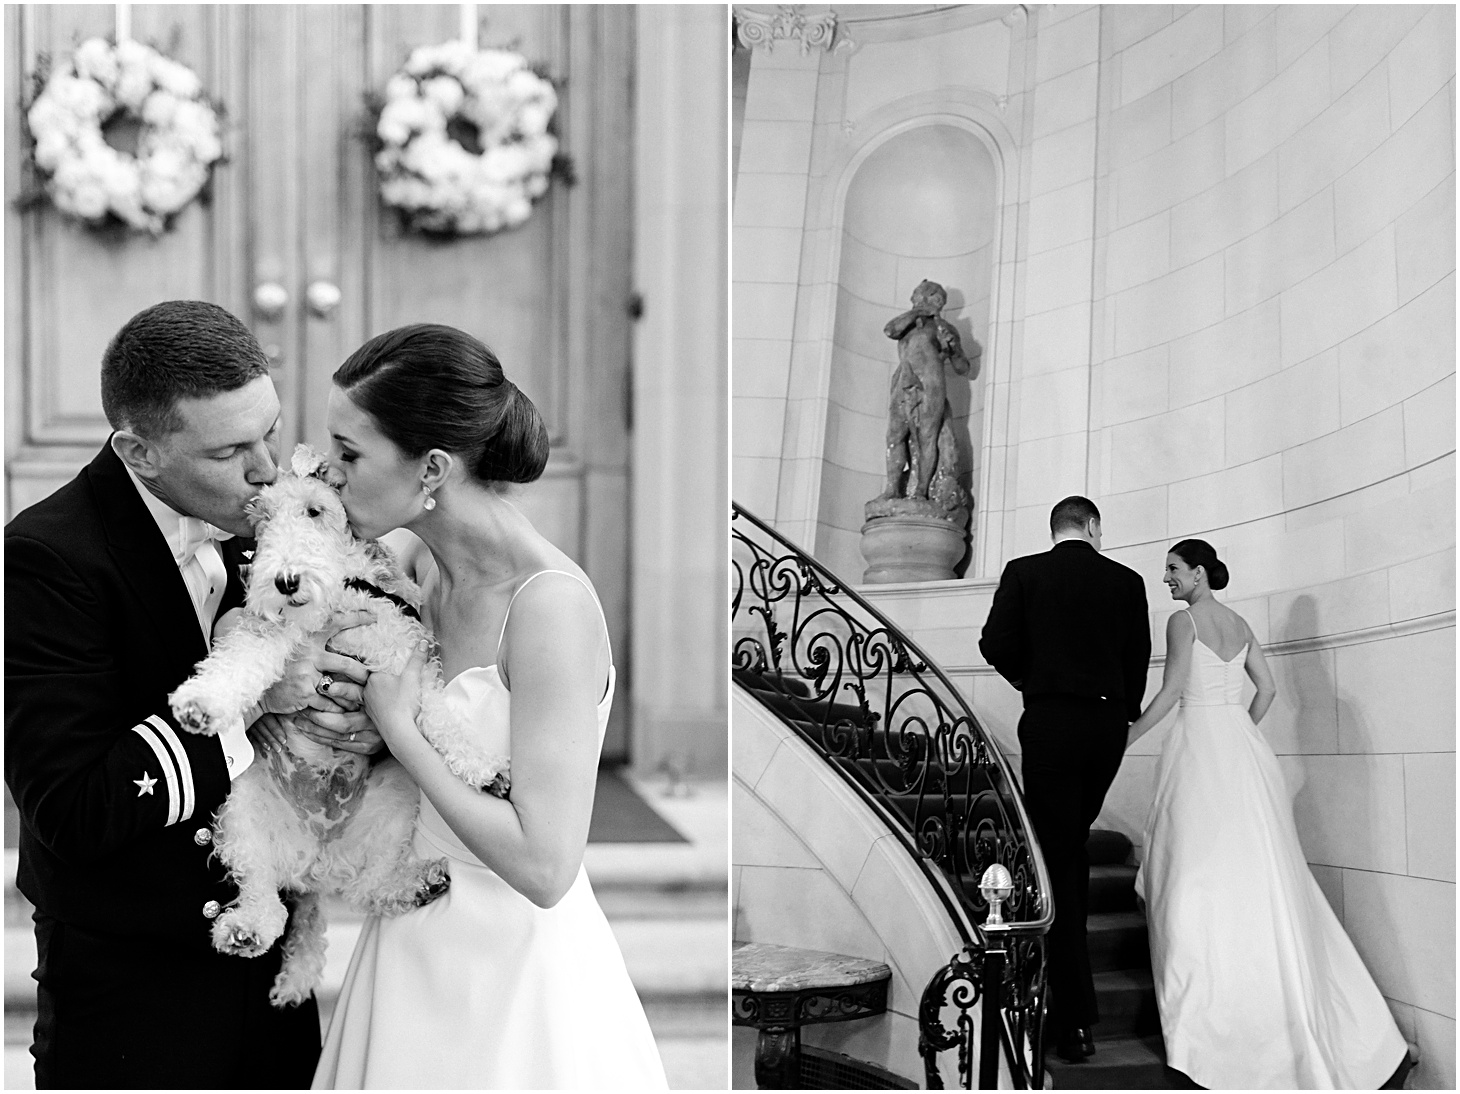 Black & White portraits - A Thoroughly Washingtonian Wedding at Meridian House in DC by Sarah Bradshaw 